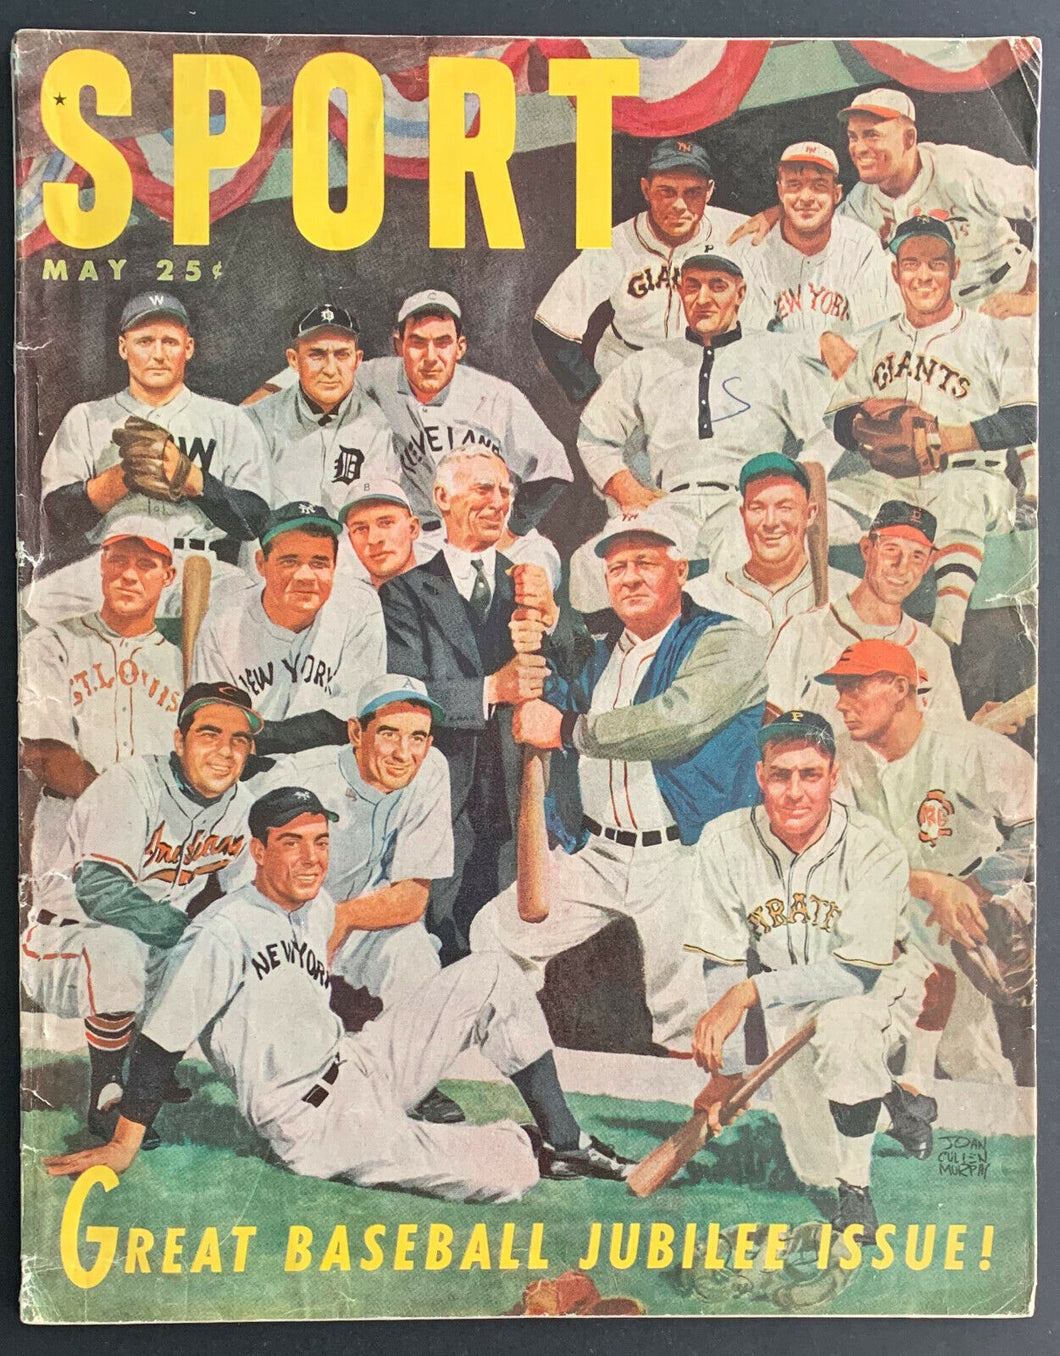 1951 Sports Magazine Great Baseball Jubilee Issue Vintage DiMaggio Ruth Cobb